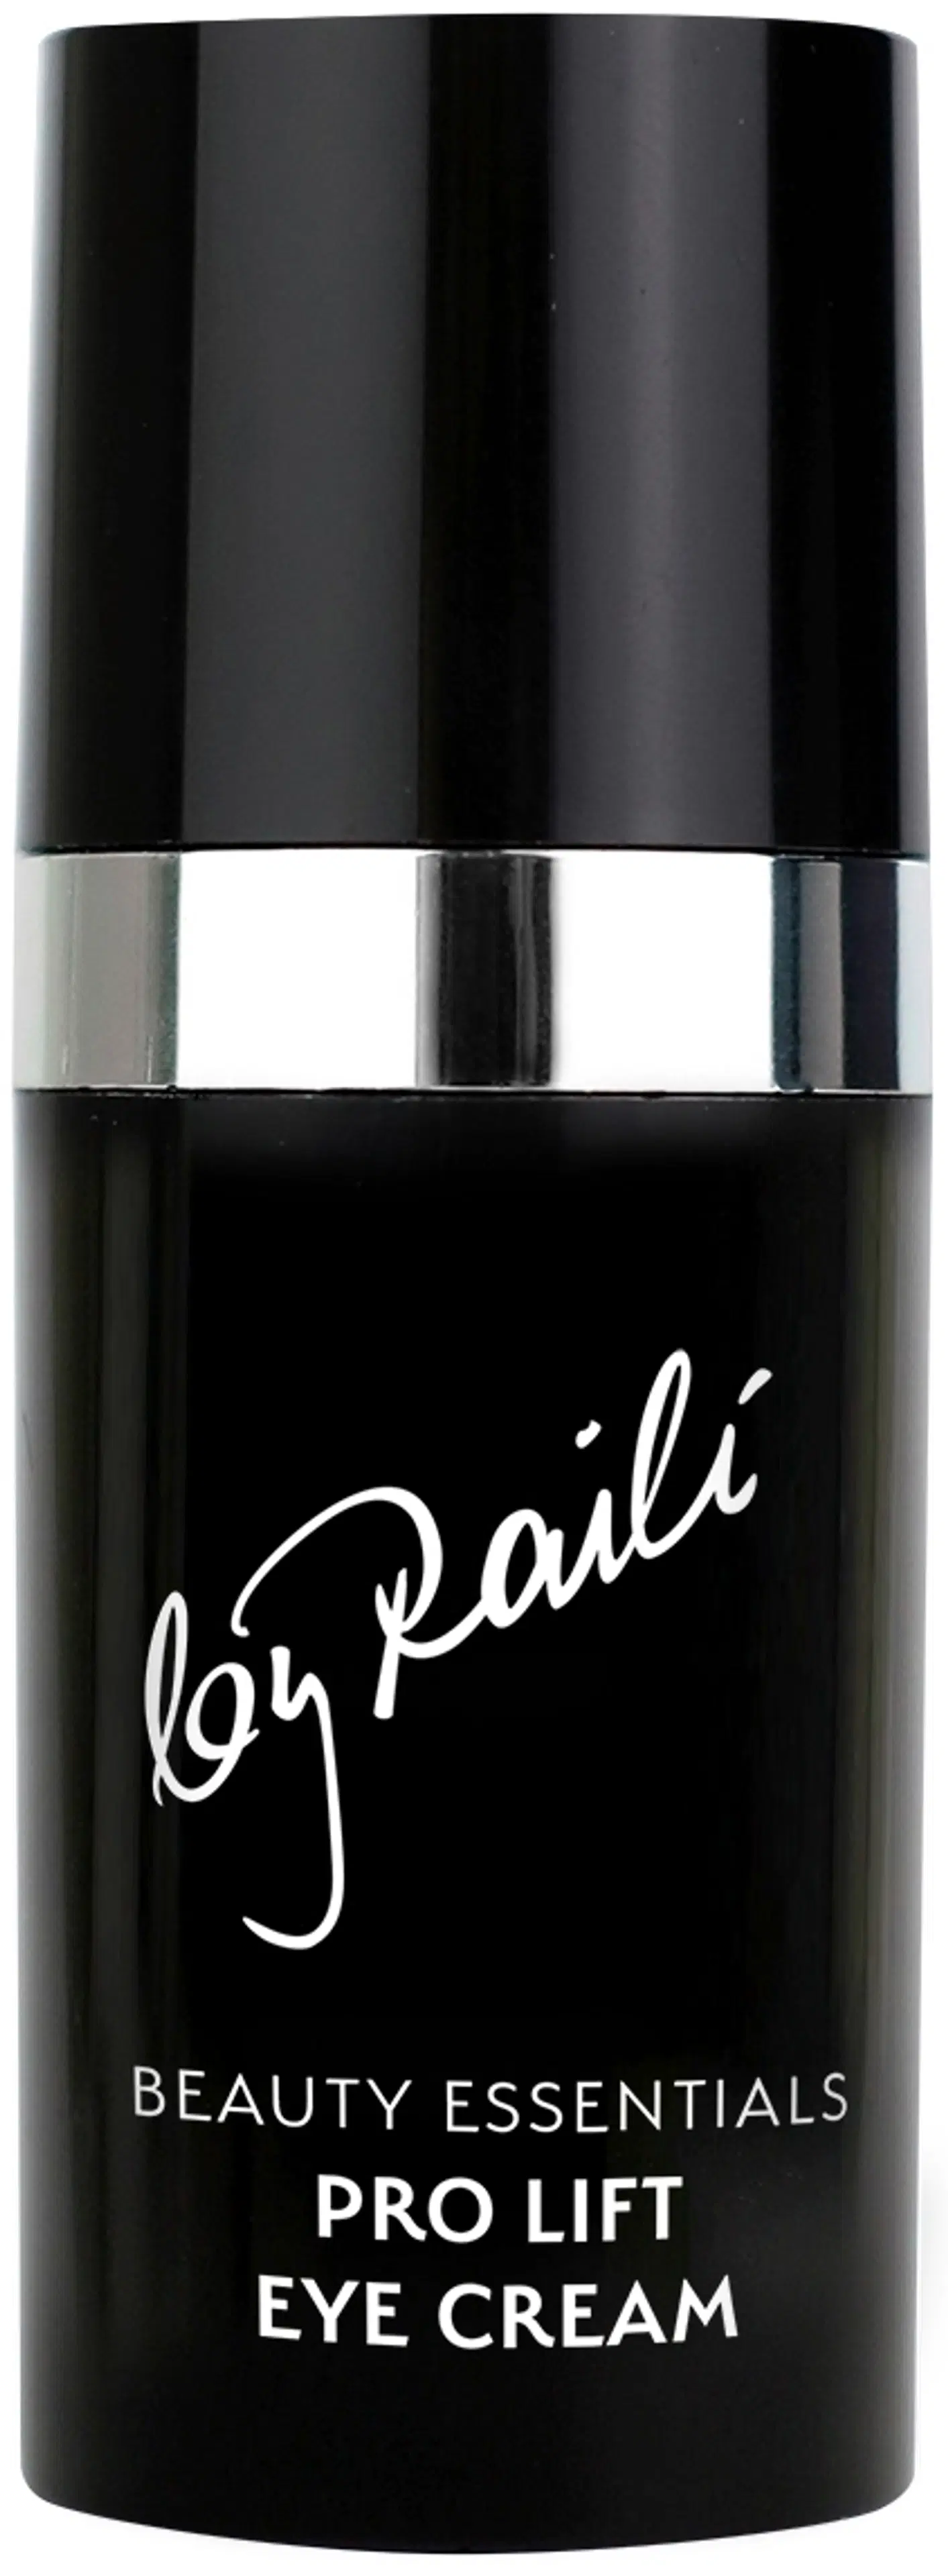 By Raili Beauty Essentials Pro Lift Eye Cream silmänympärysvoide 15 ml